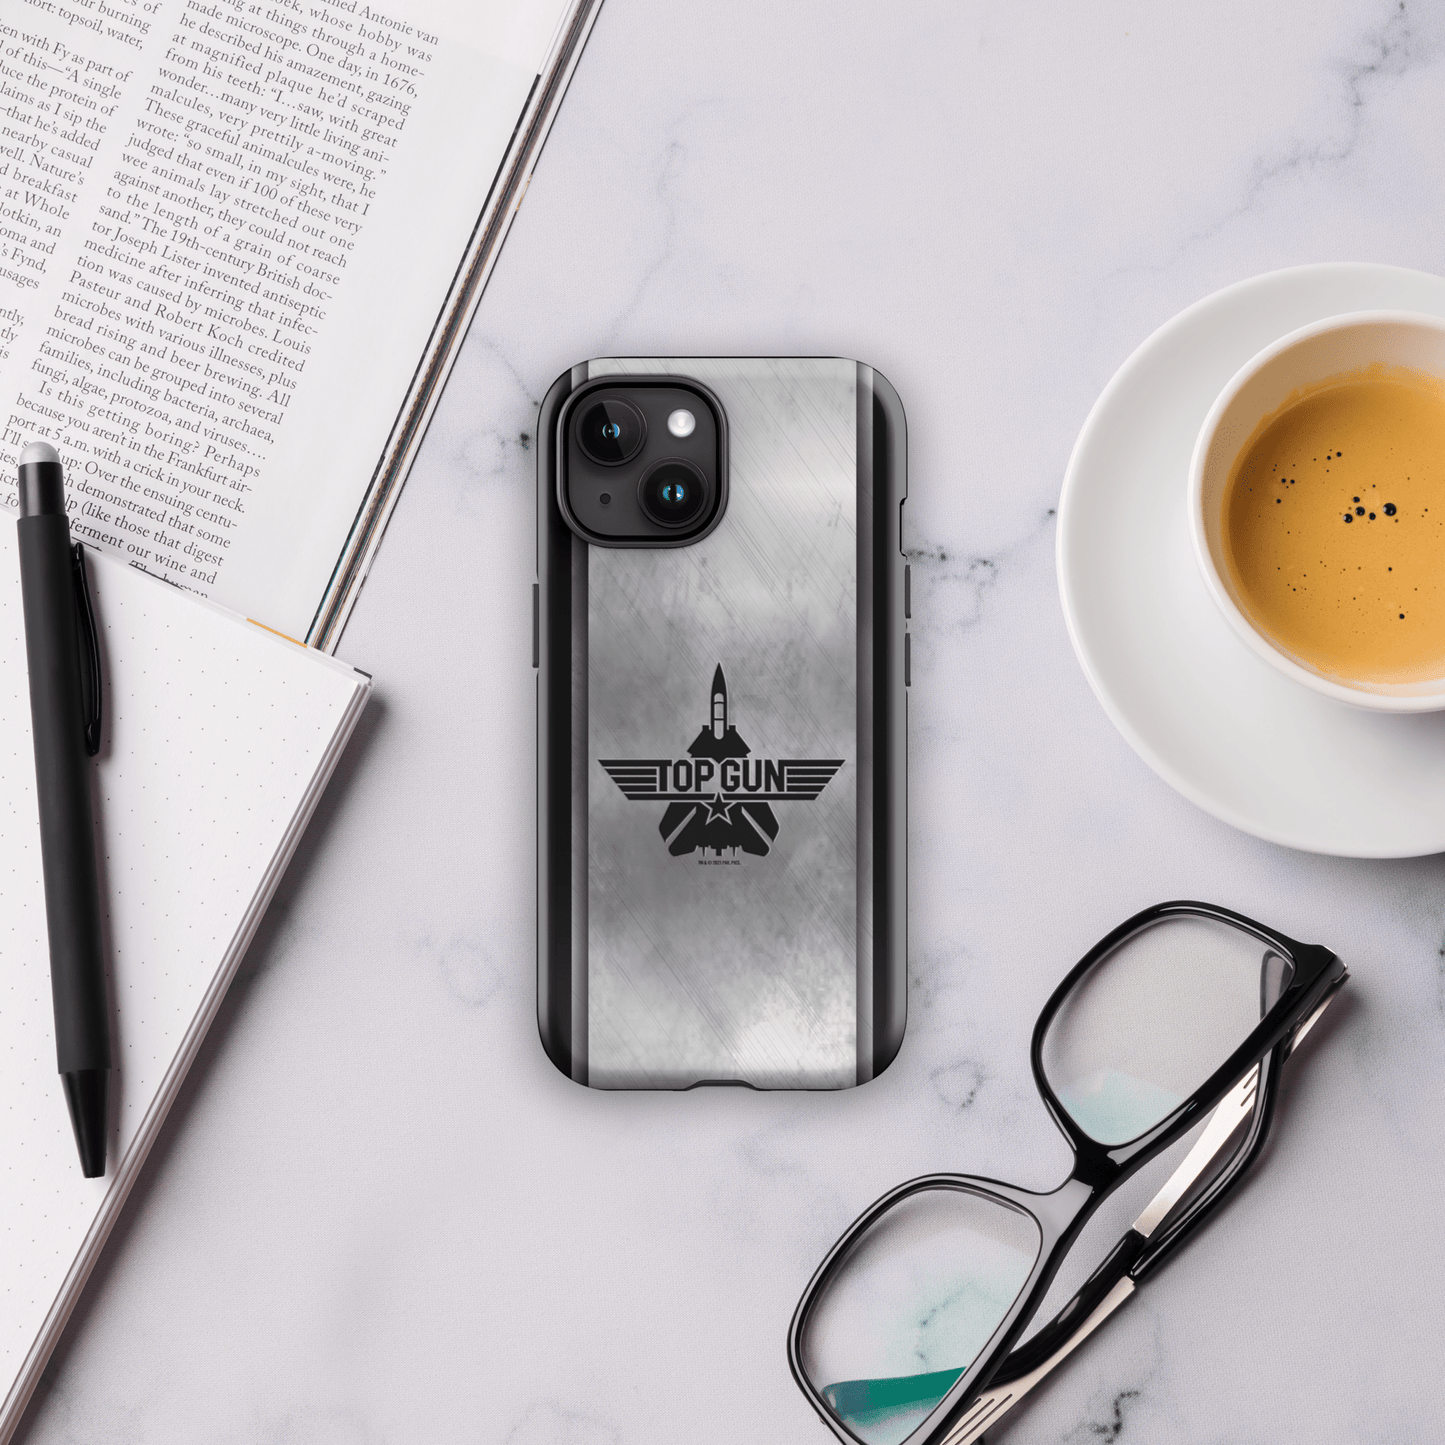 Top Gun Logo Tough Phone Case - iPhone - Paramount Shop